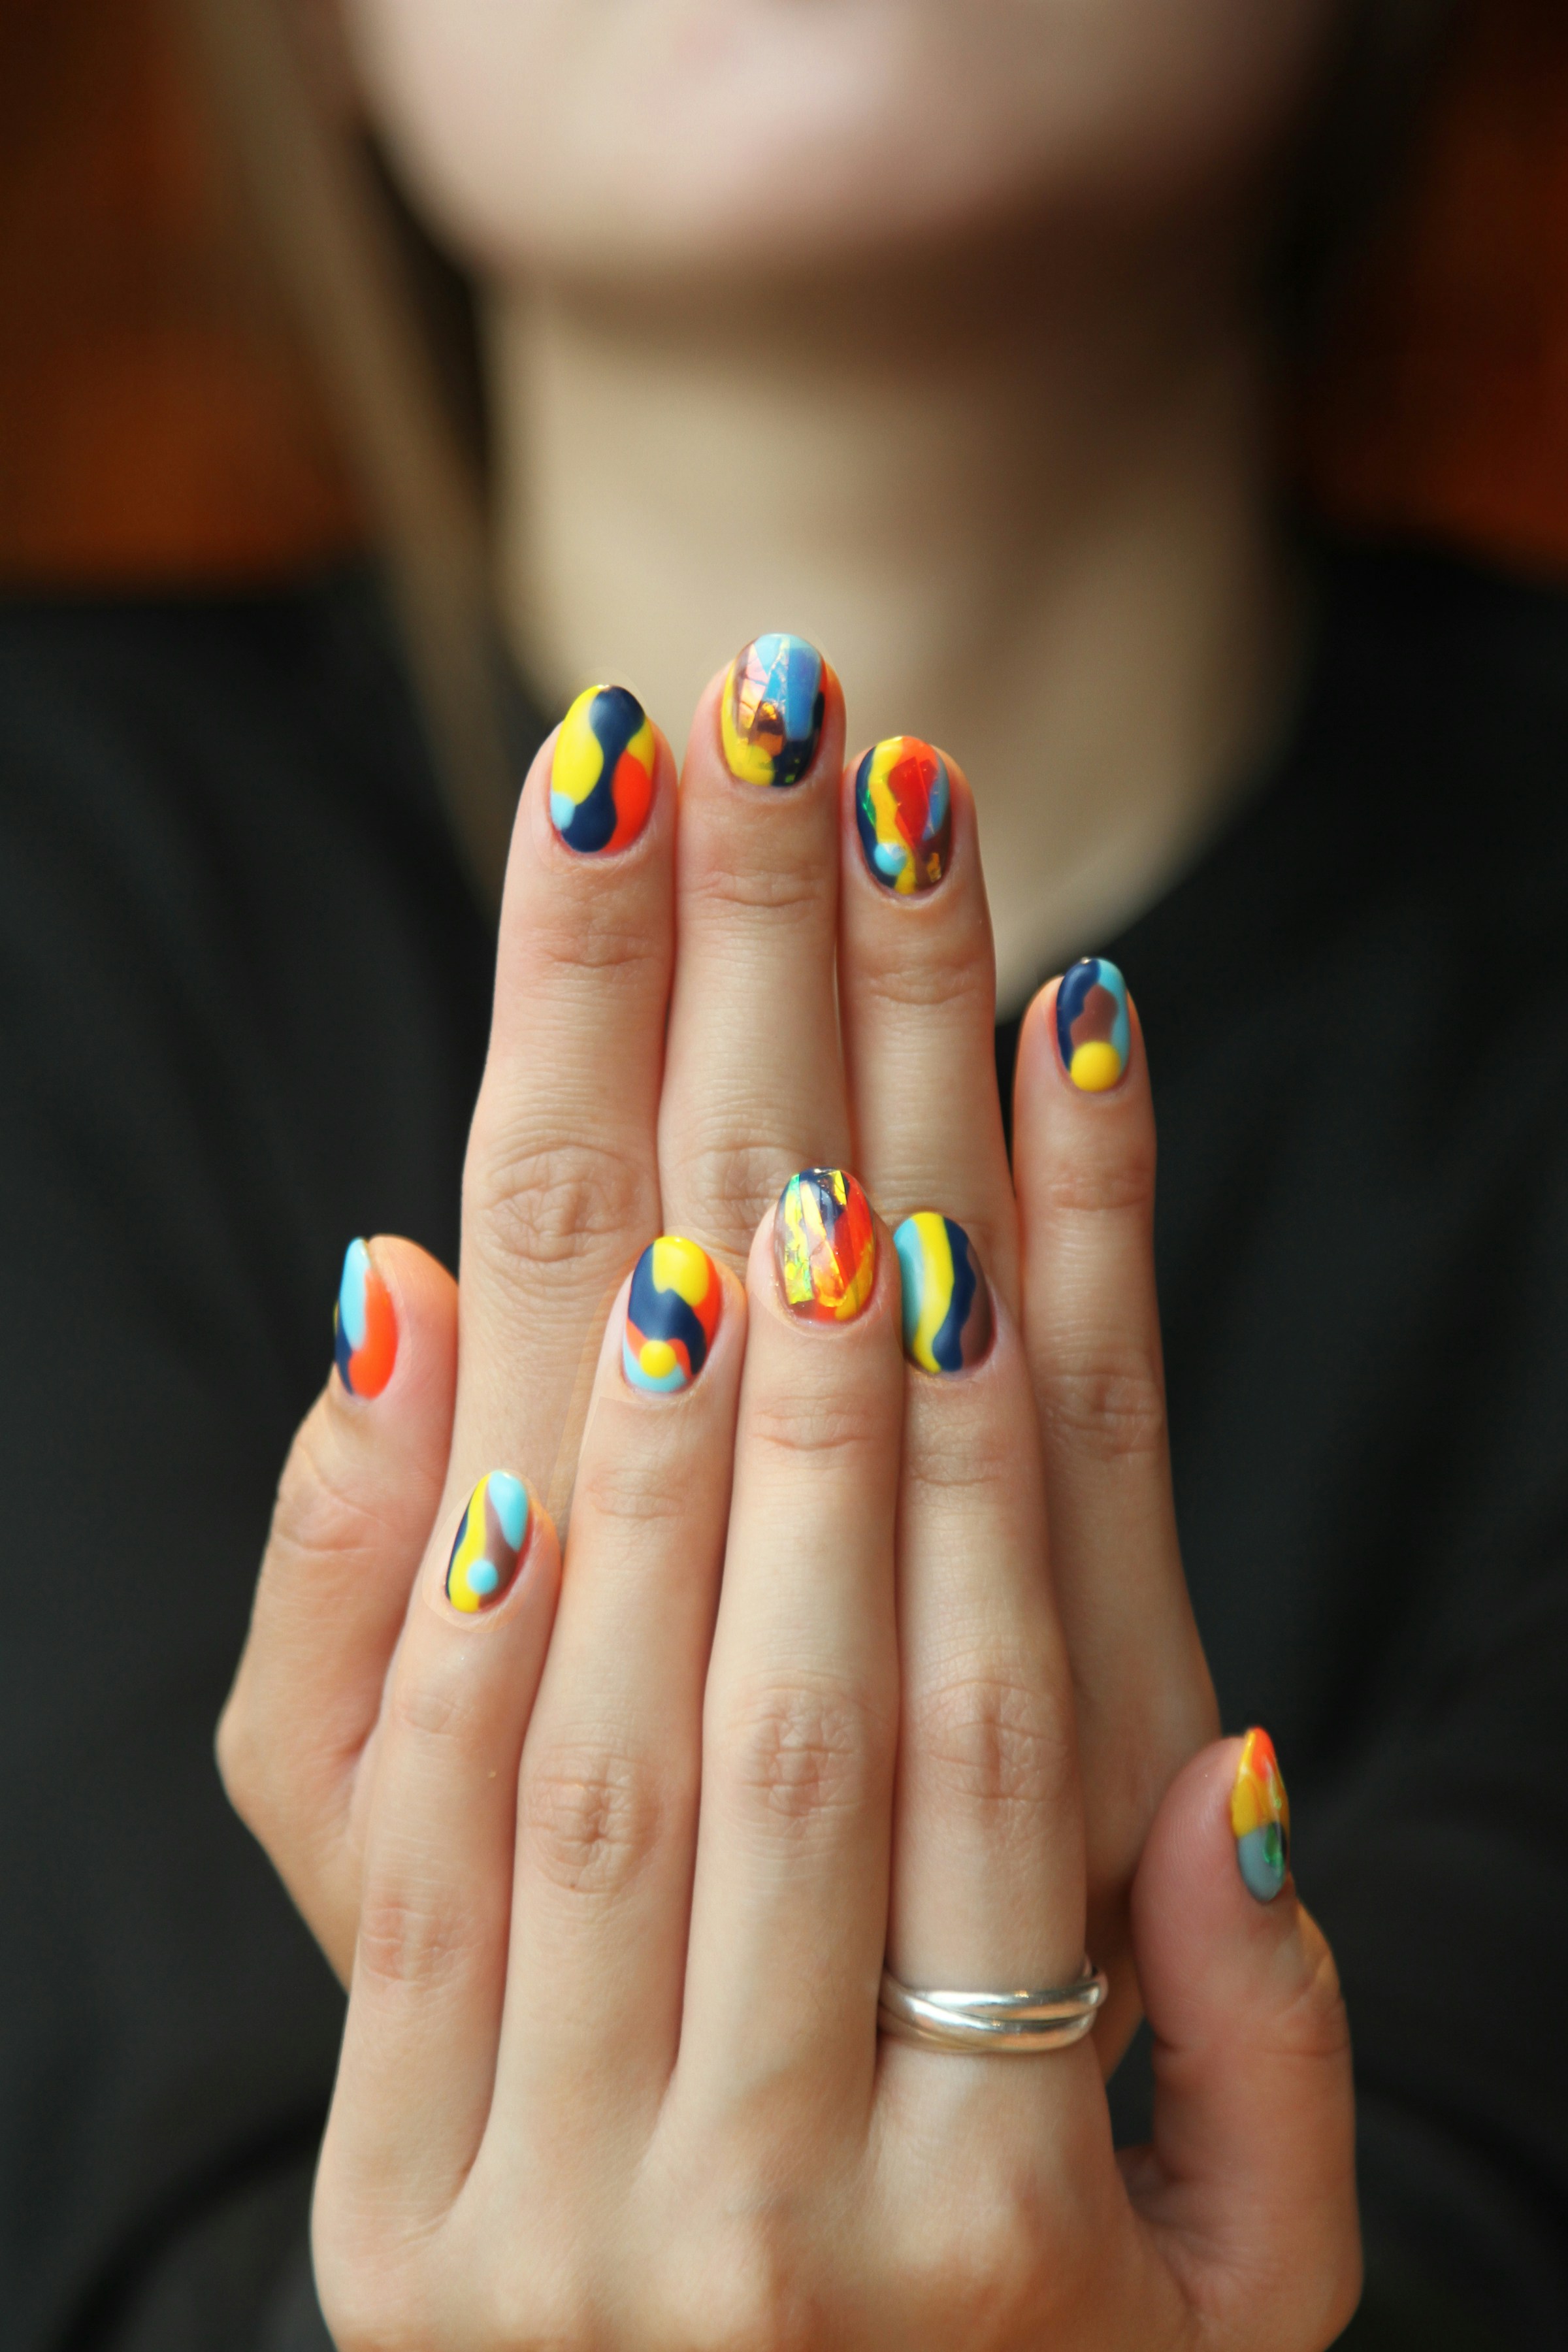 Un motif de nail art funky | Source : Unsplash